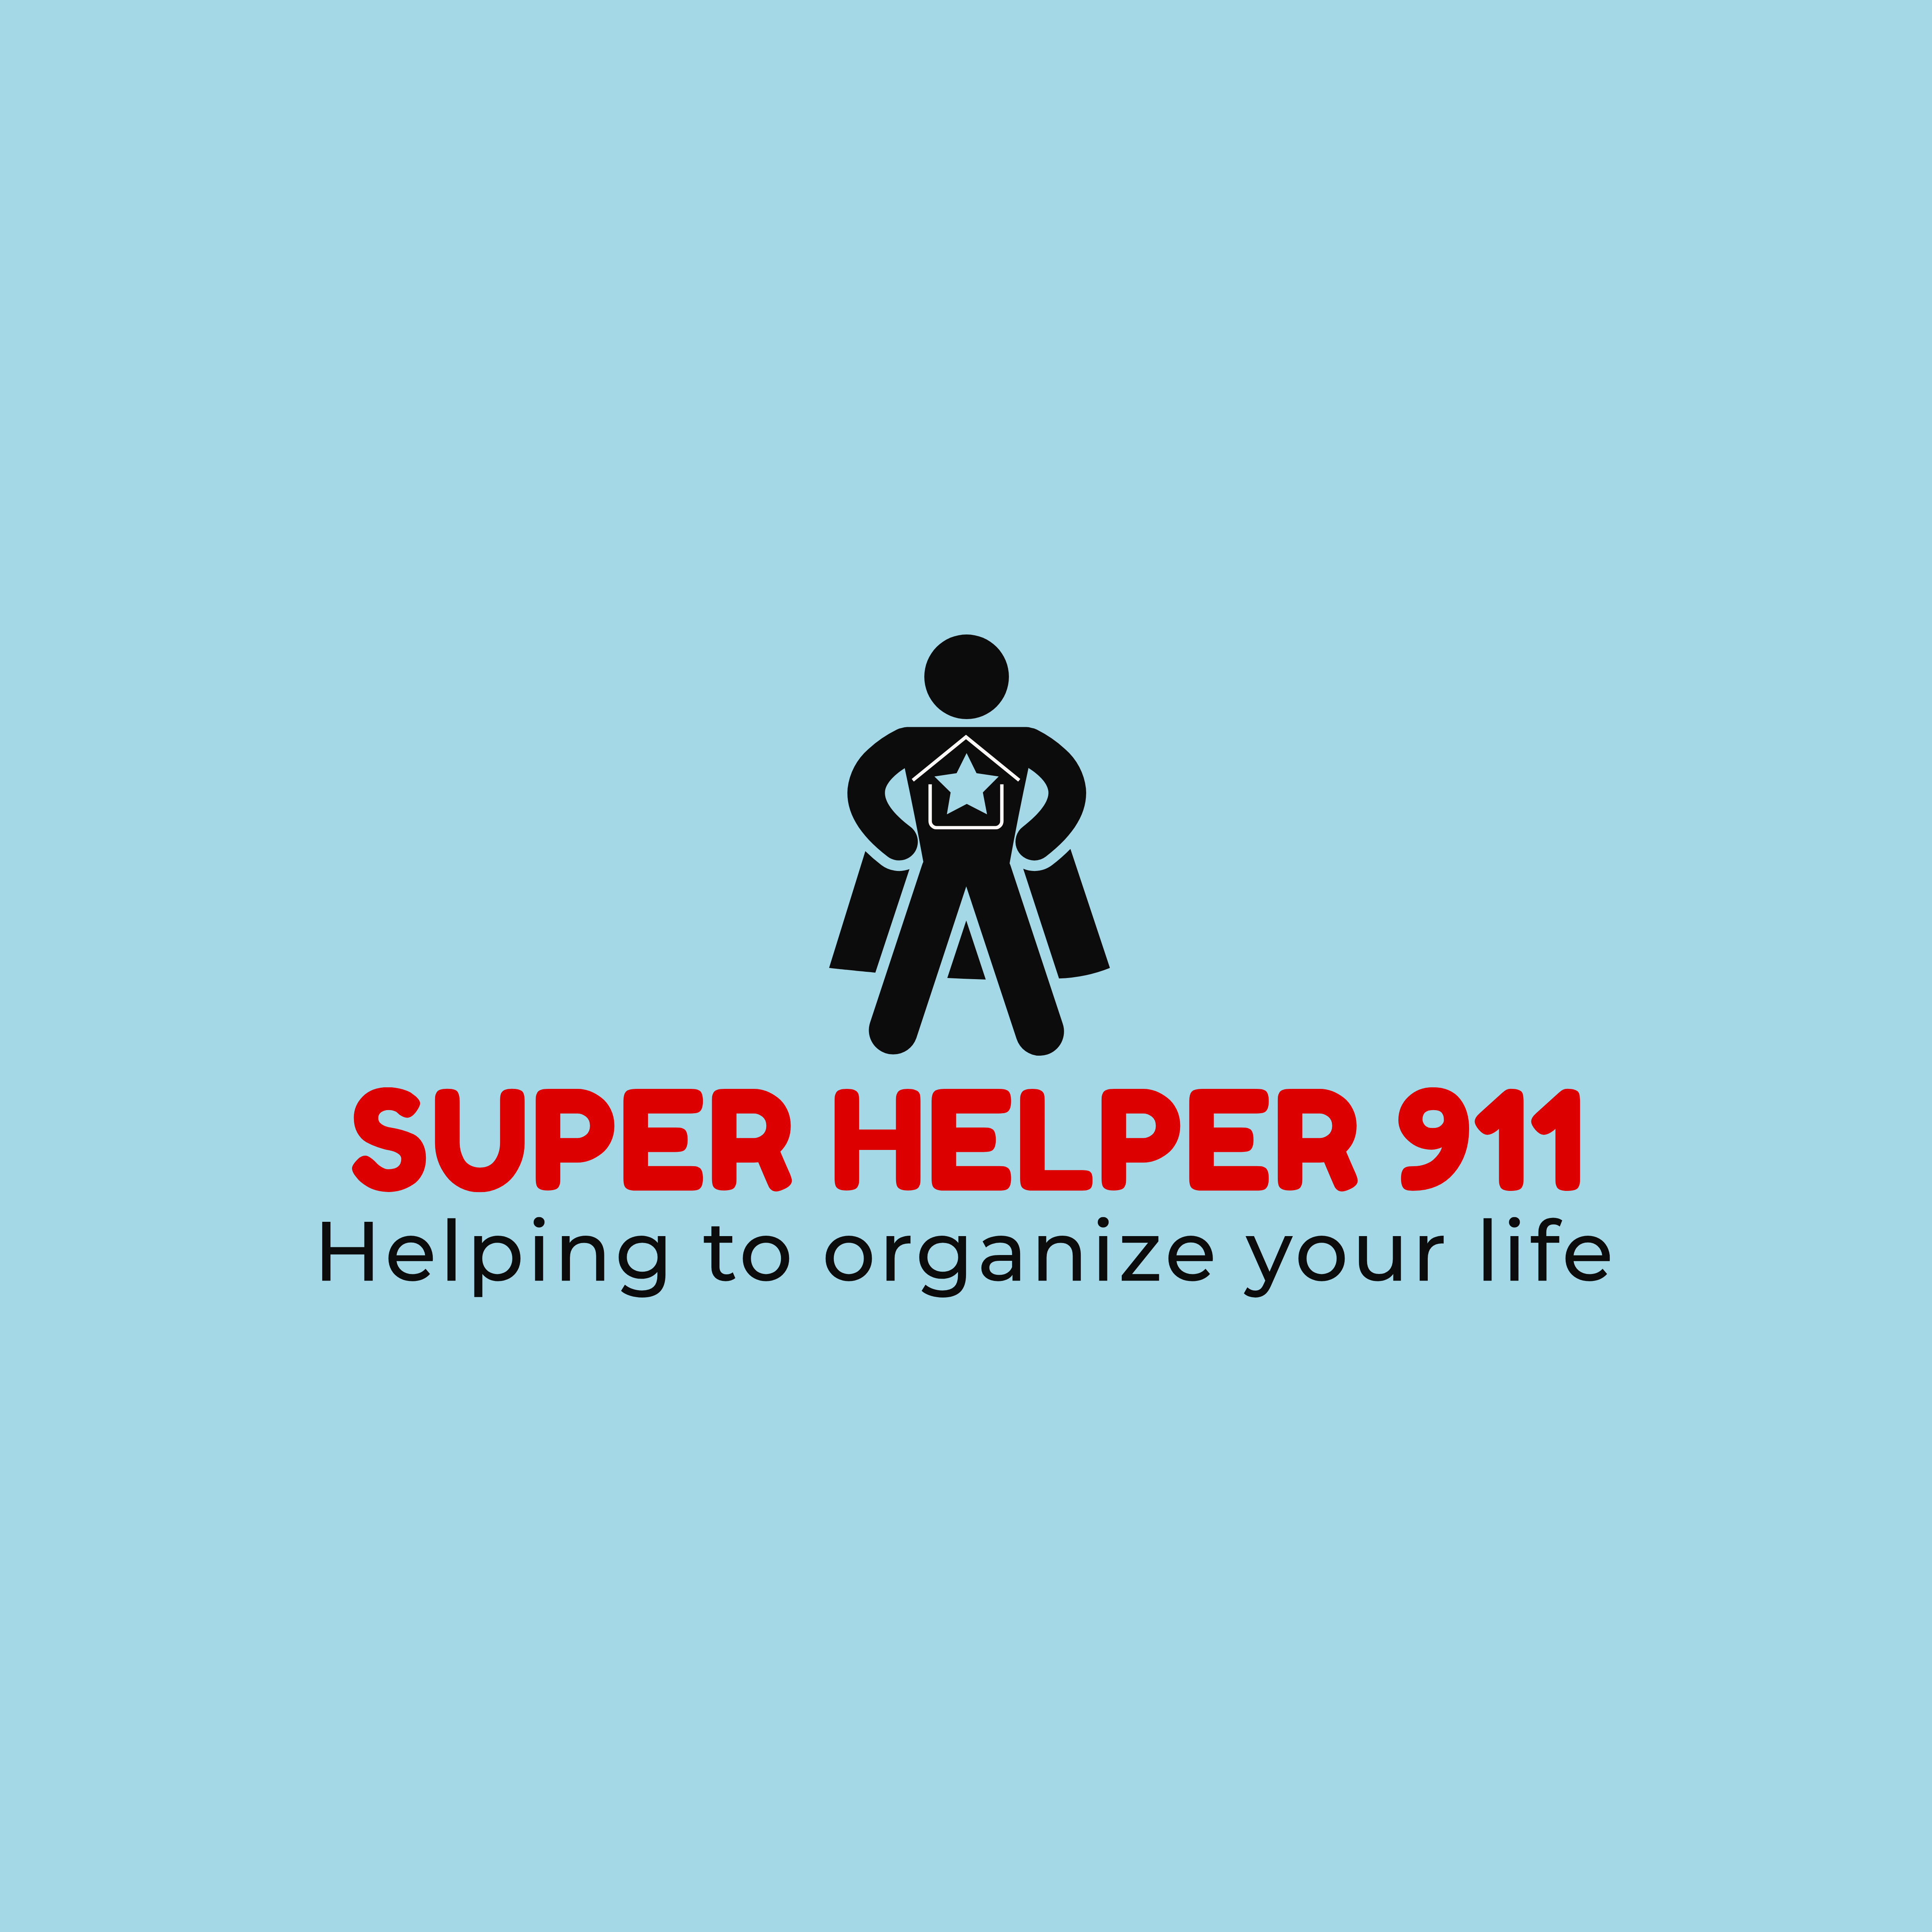 Super Helper 911 Inc